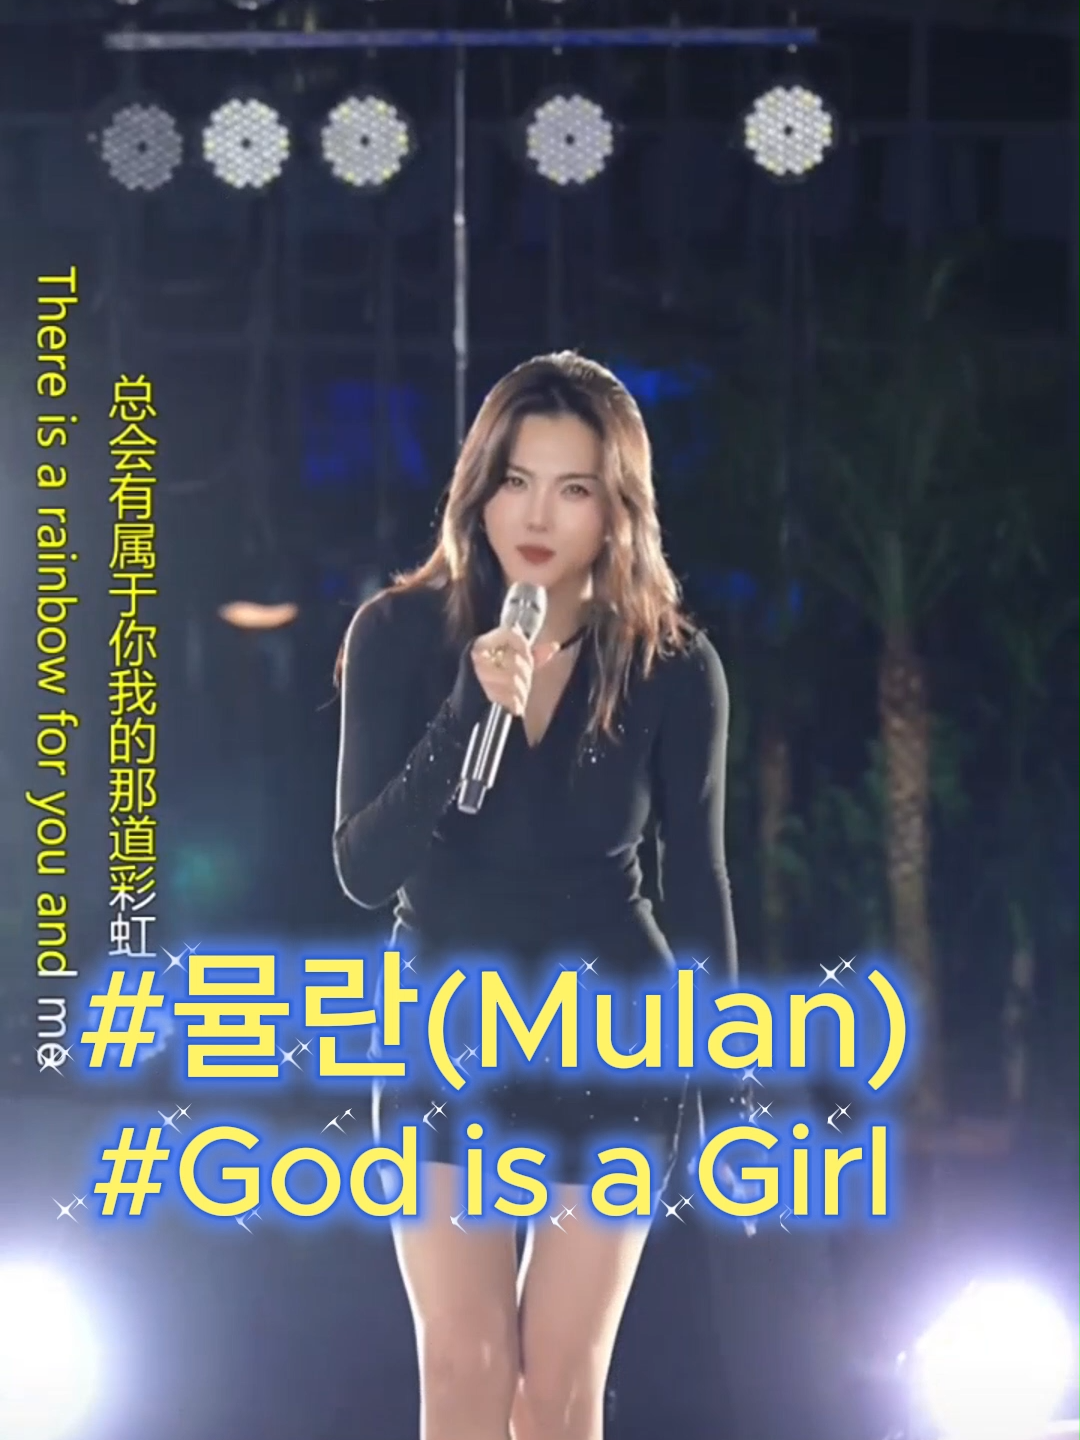 Mulan - God is a girl (뮤란, 뮬란)  #cover #popg #music #song #singer #coversong #뮤란 #뮬란 #mulan #缪兰 #godisagirl #douyin #tiktok #가수 #여가수 #노래 #발라드 #댄스